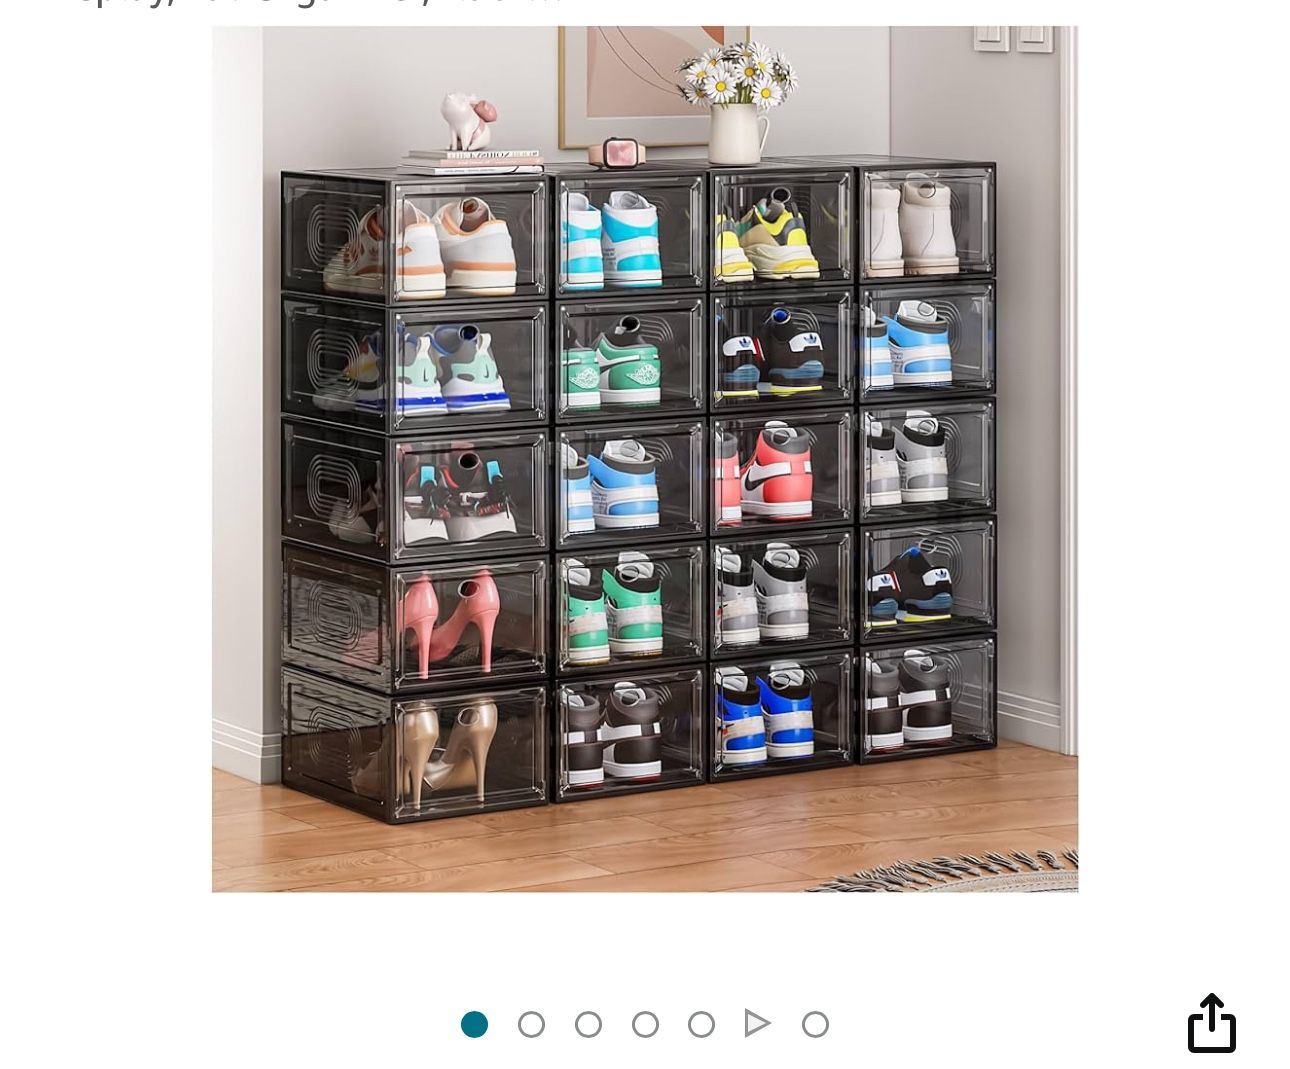 Shoe Rack Storage New $$30